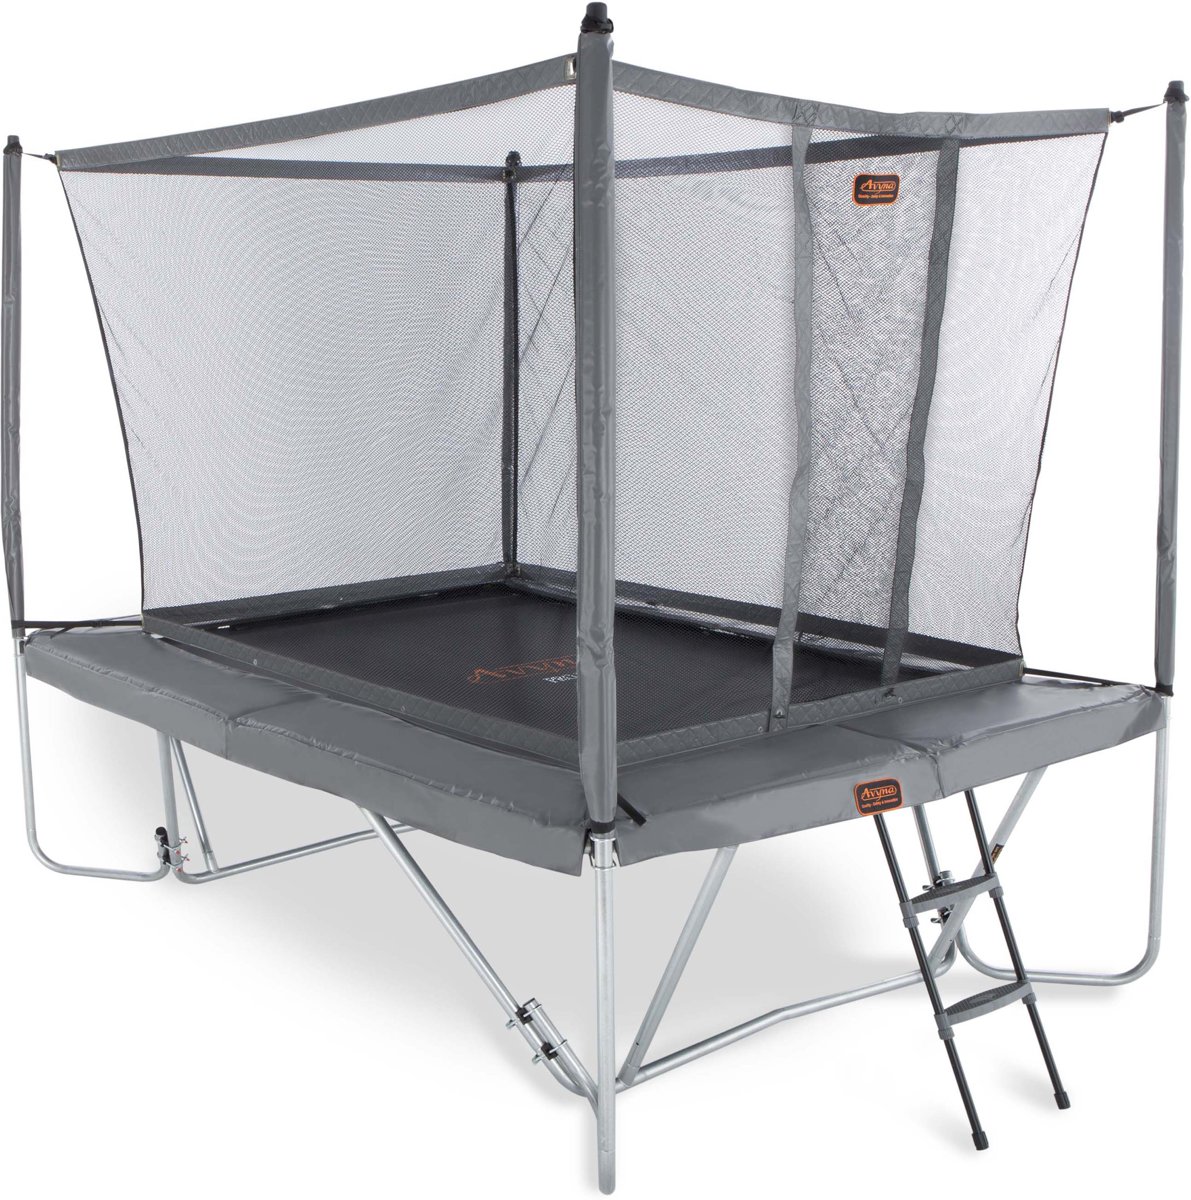 Avyna trampoline PRO-LINE 23 (300x225cm) + net boven + ladder - grijs